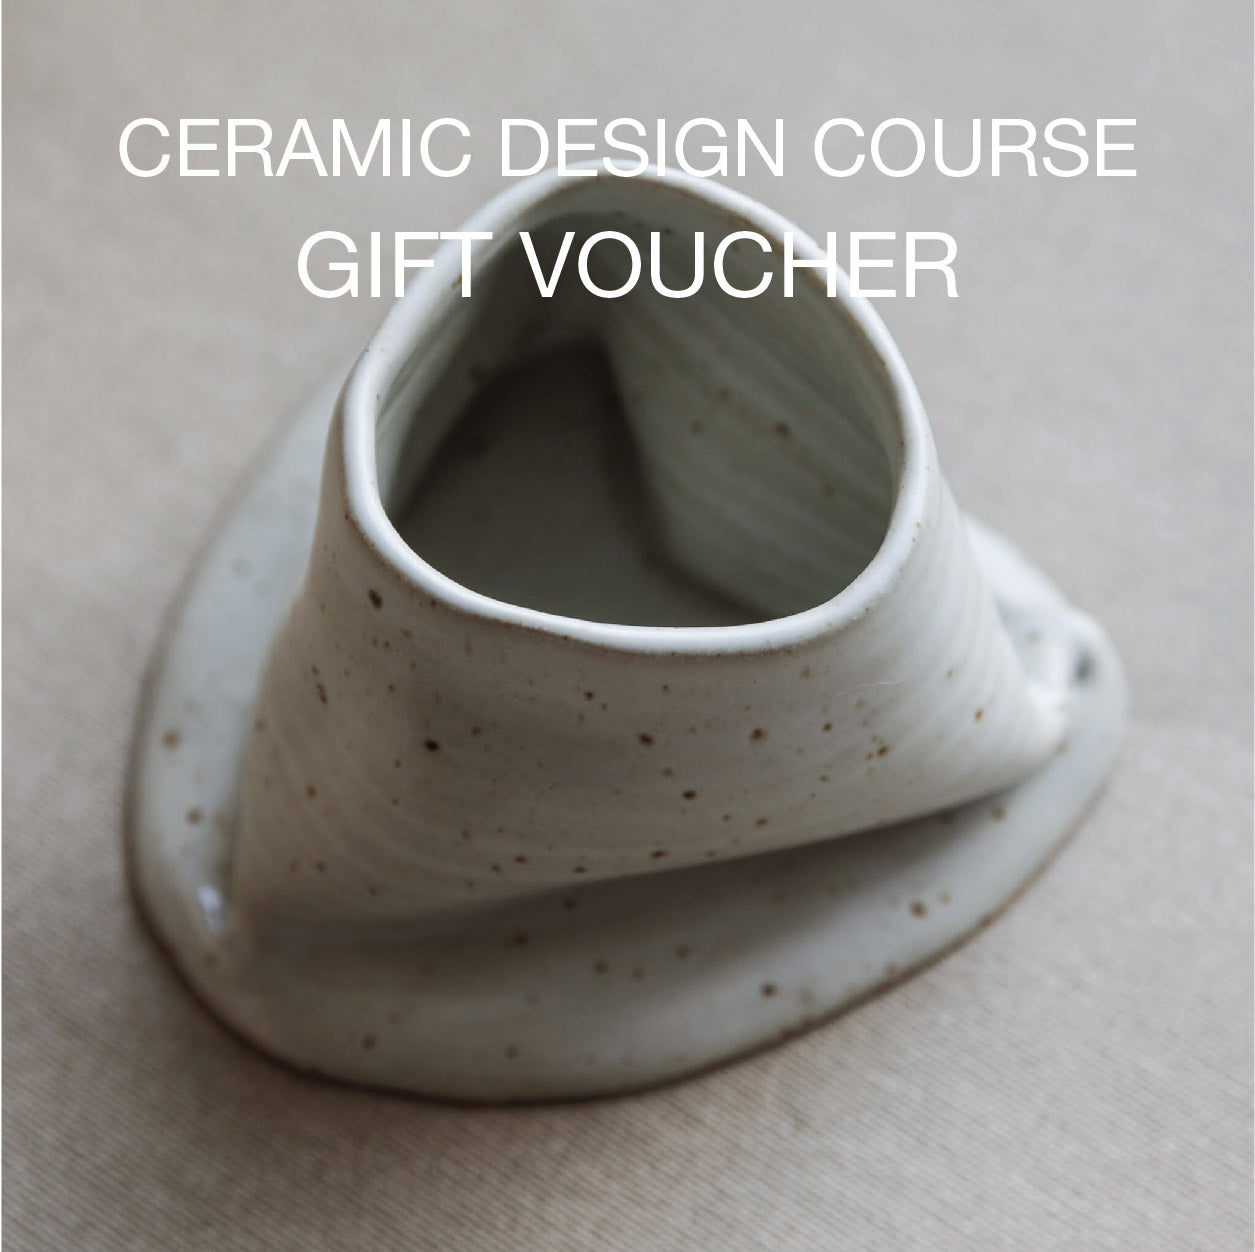 Gift Voucher - Ceramic Design Course